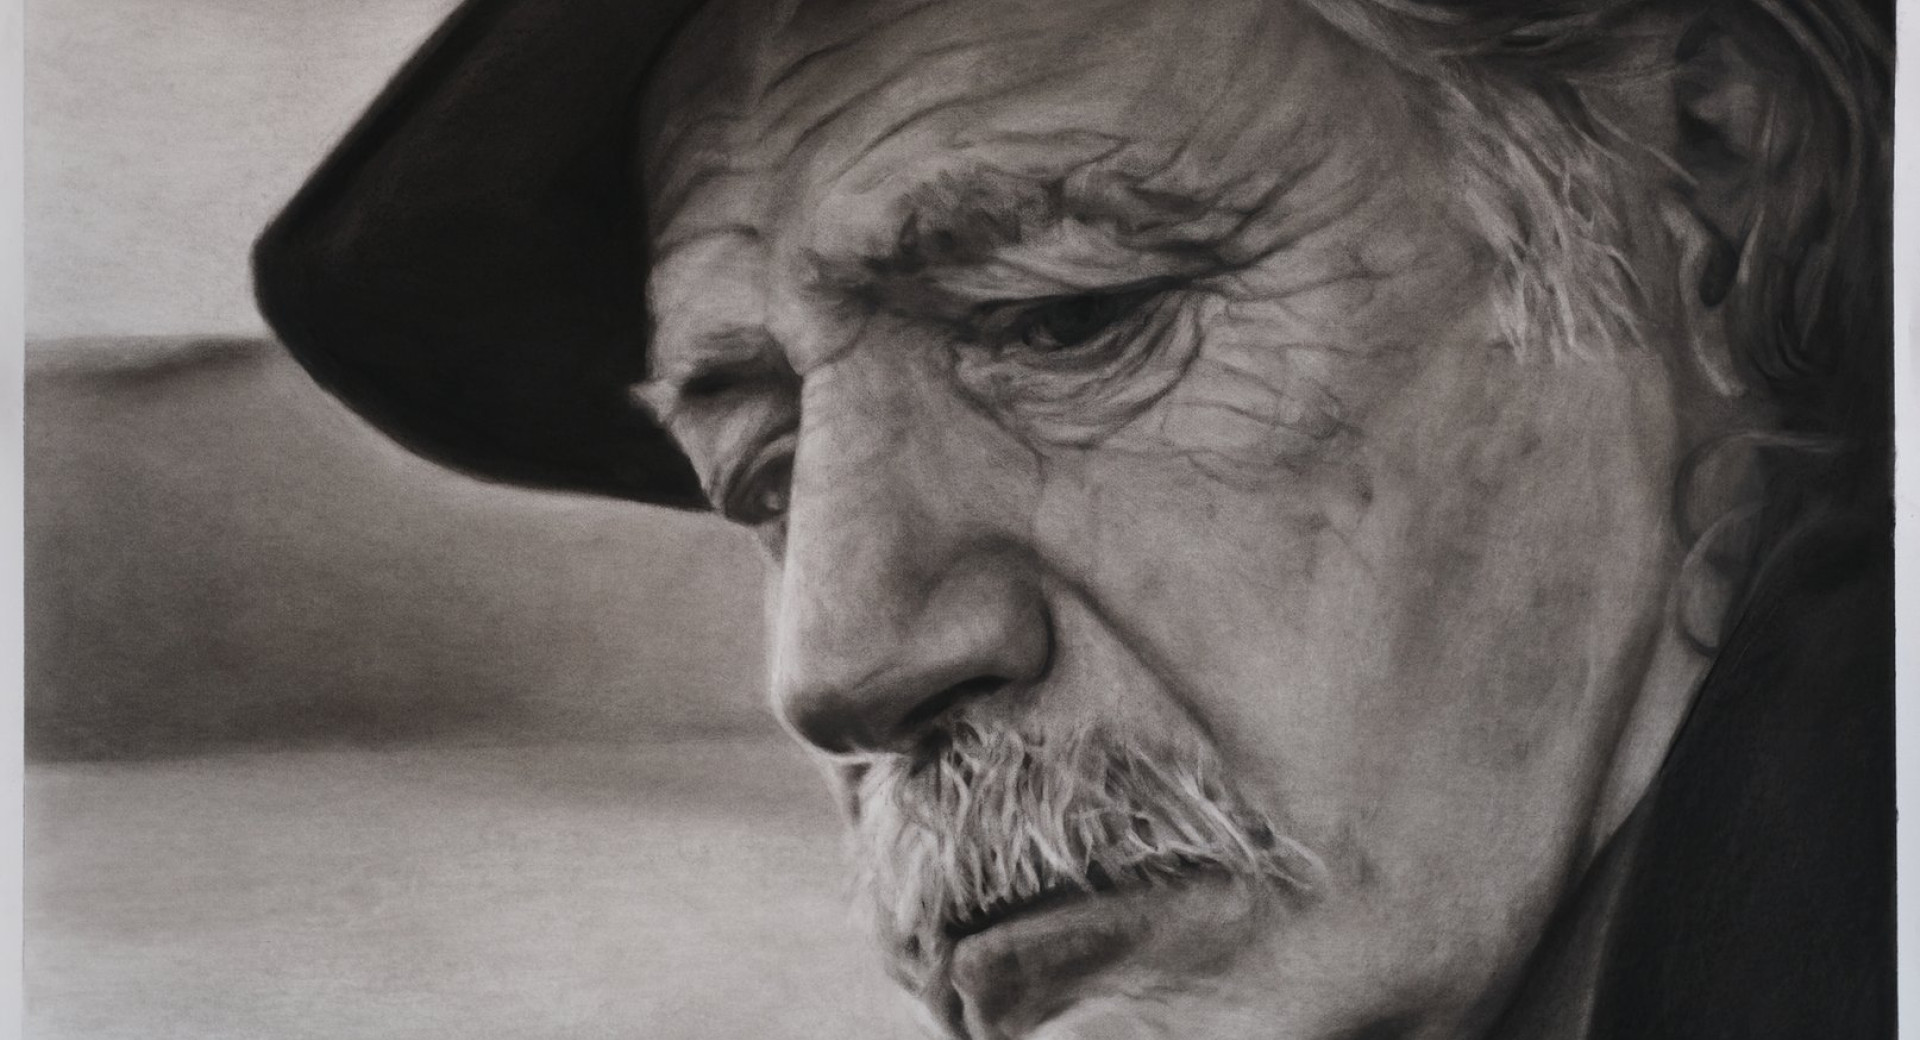 crno bela fotografija starega, zgubanega cloveka s crnim klobukom